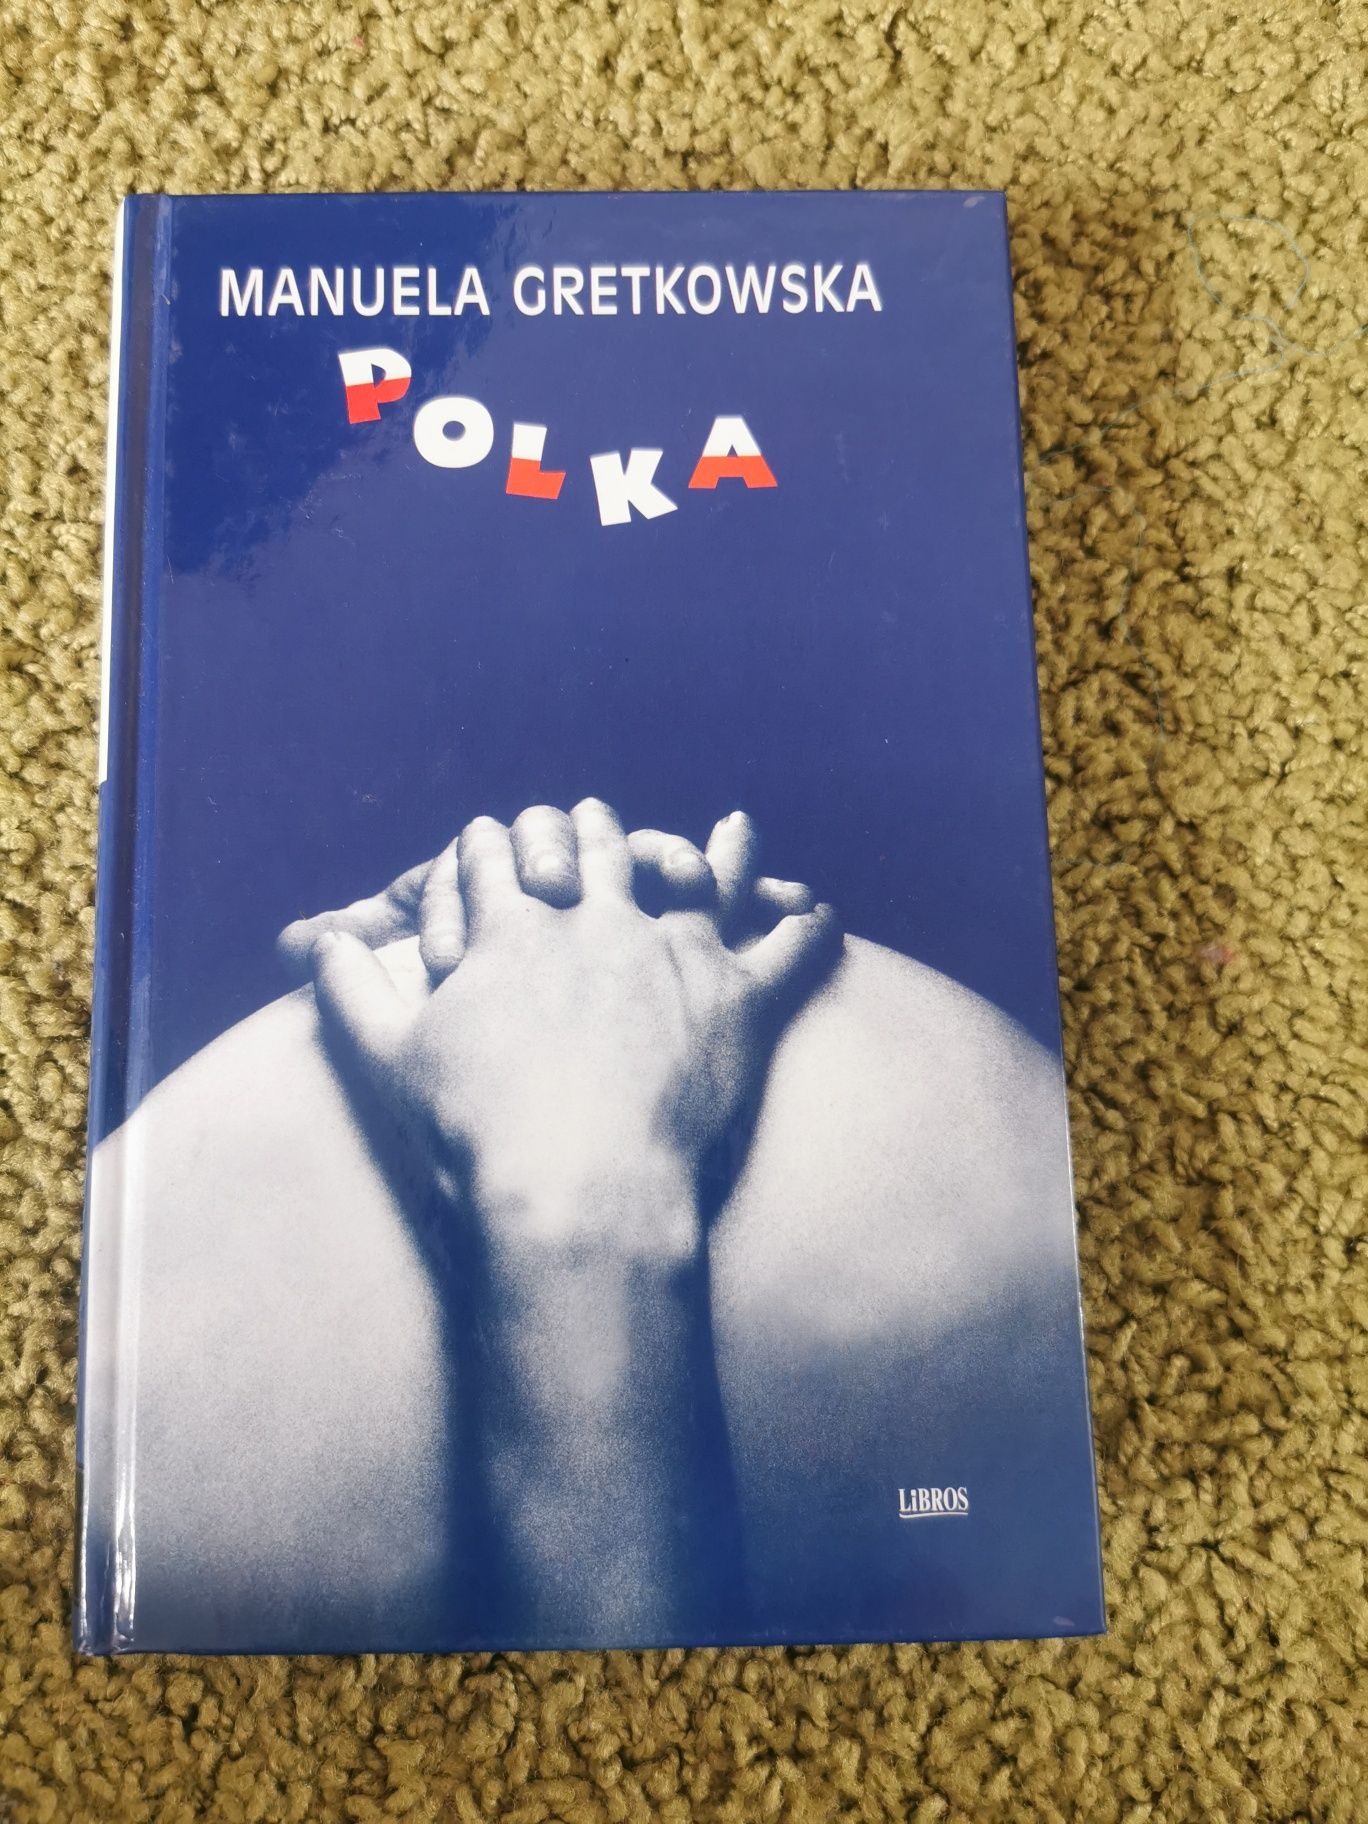 Manuela Gretkowksa Polka